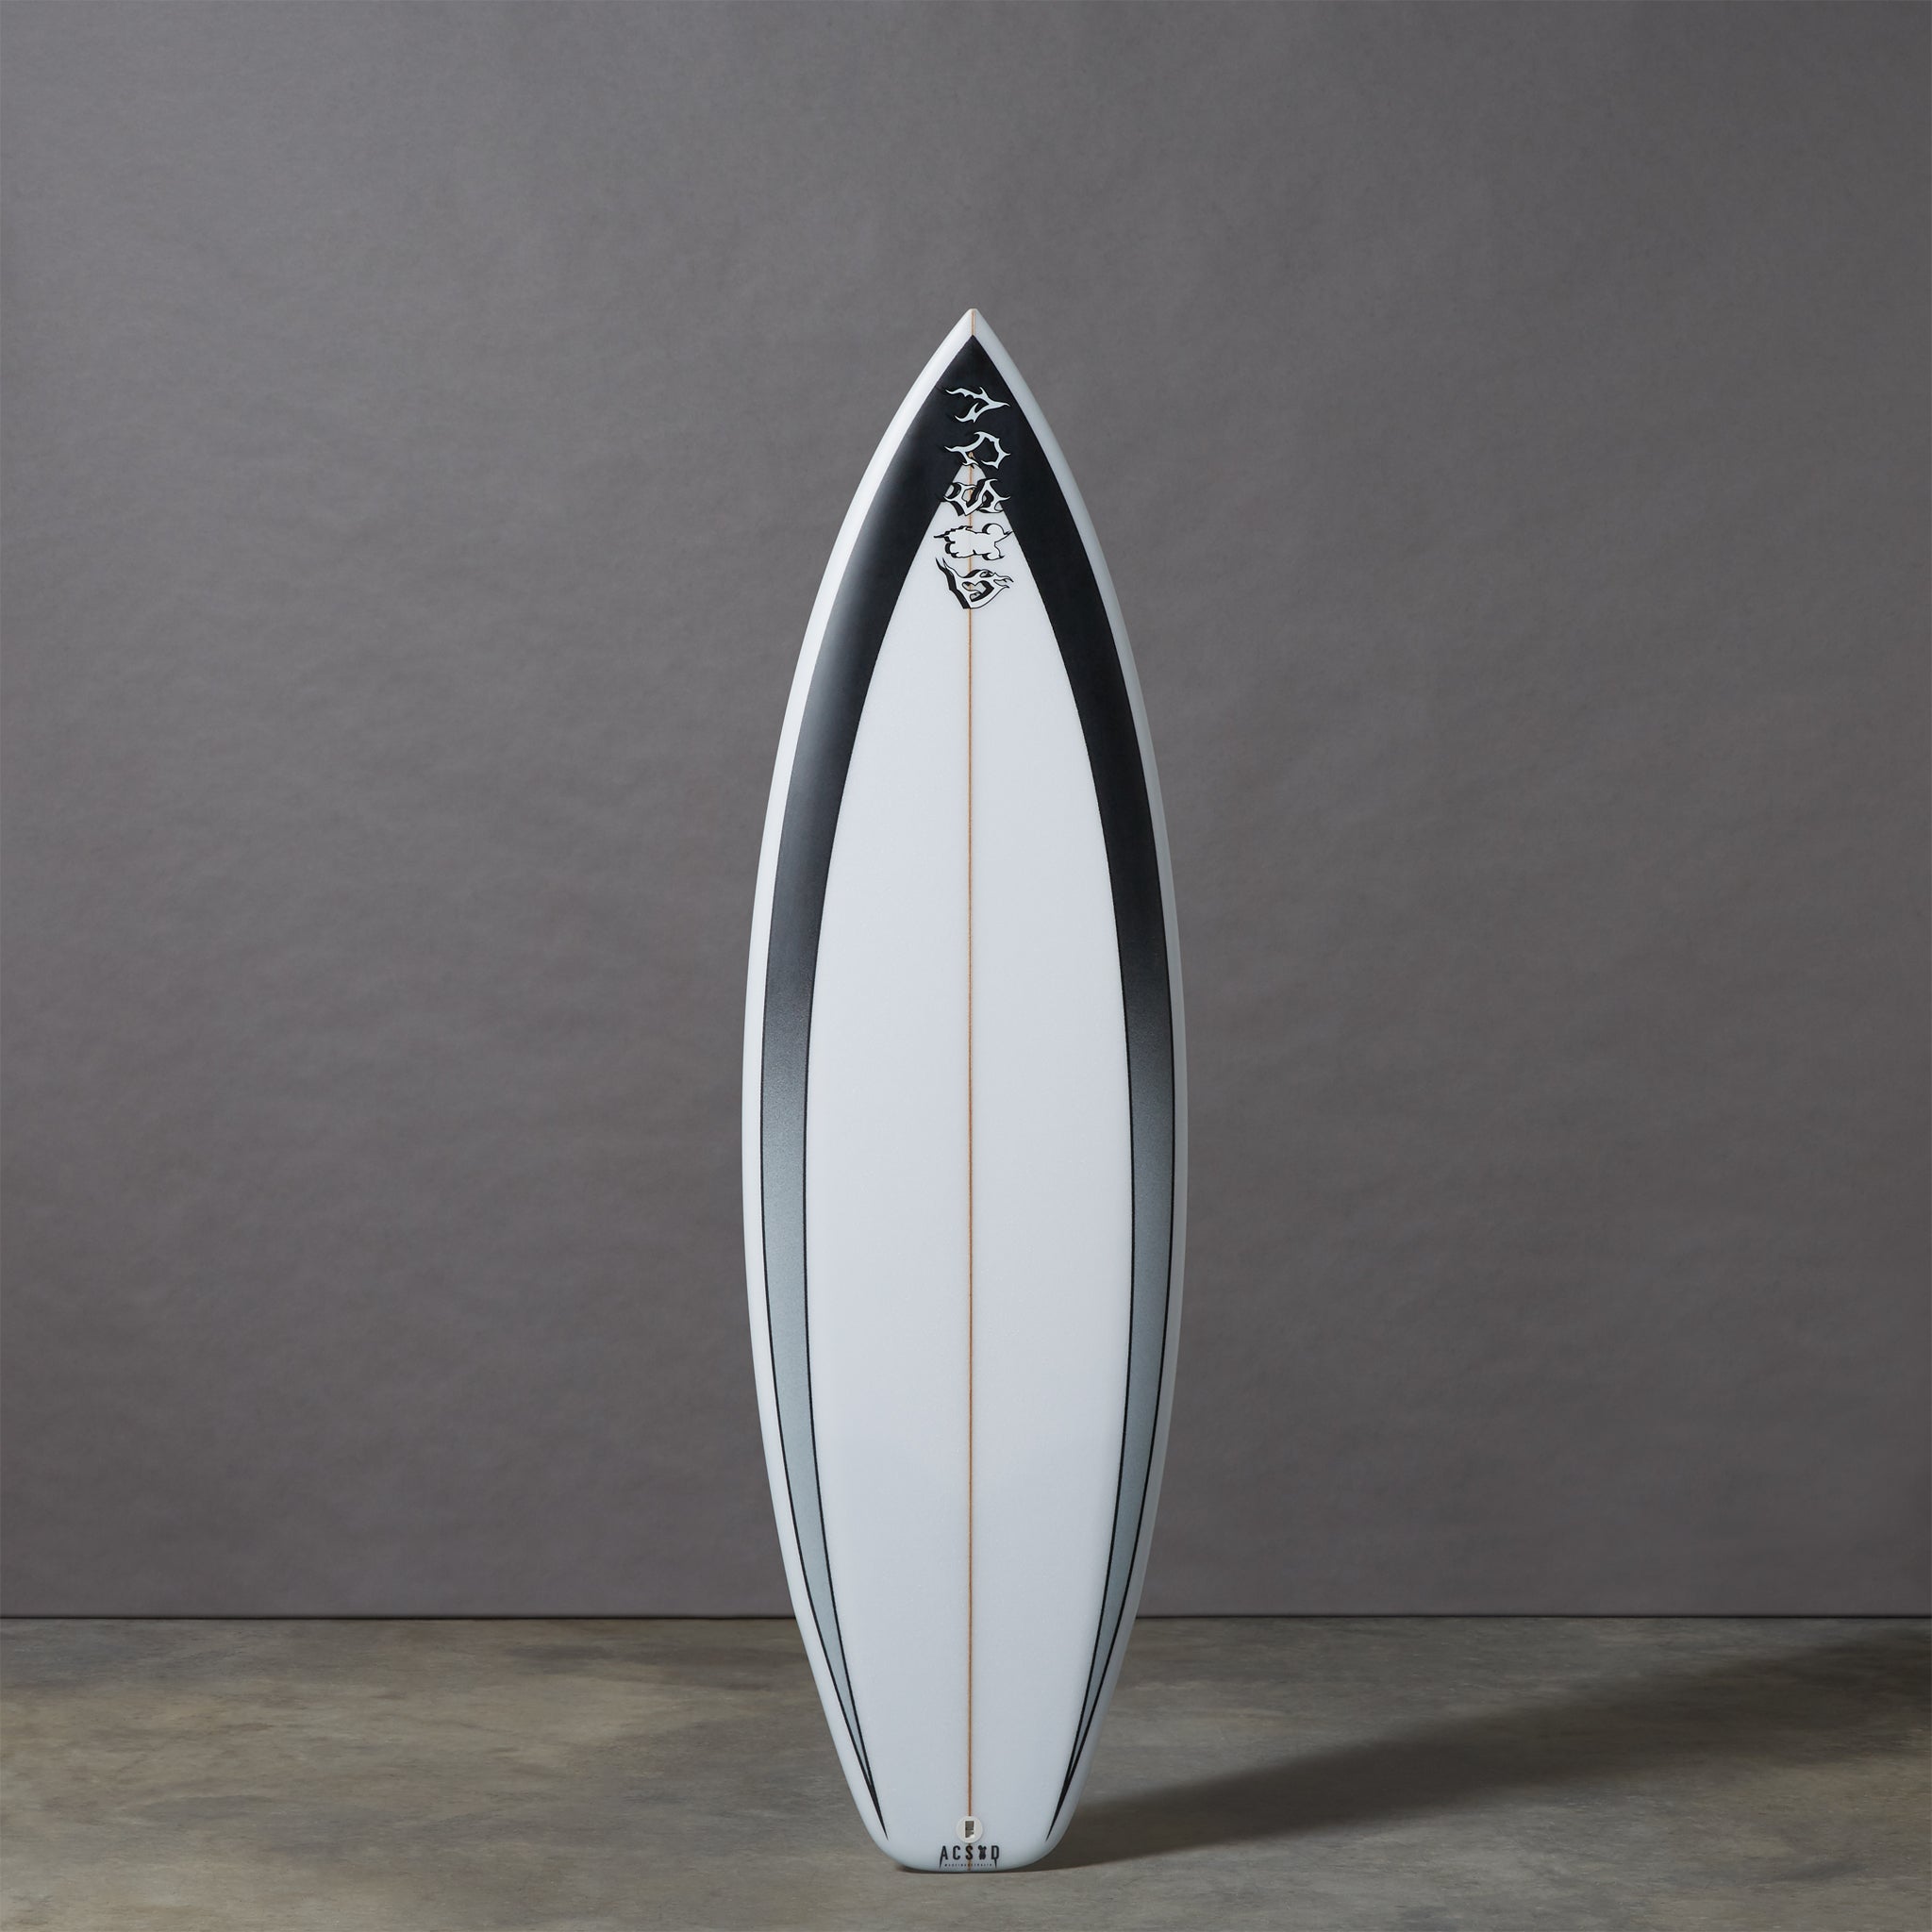 LOTUS – ACSOD Surfboards